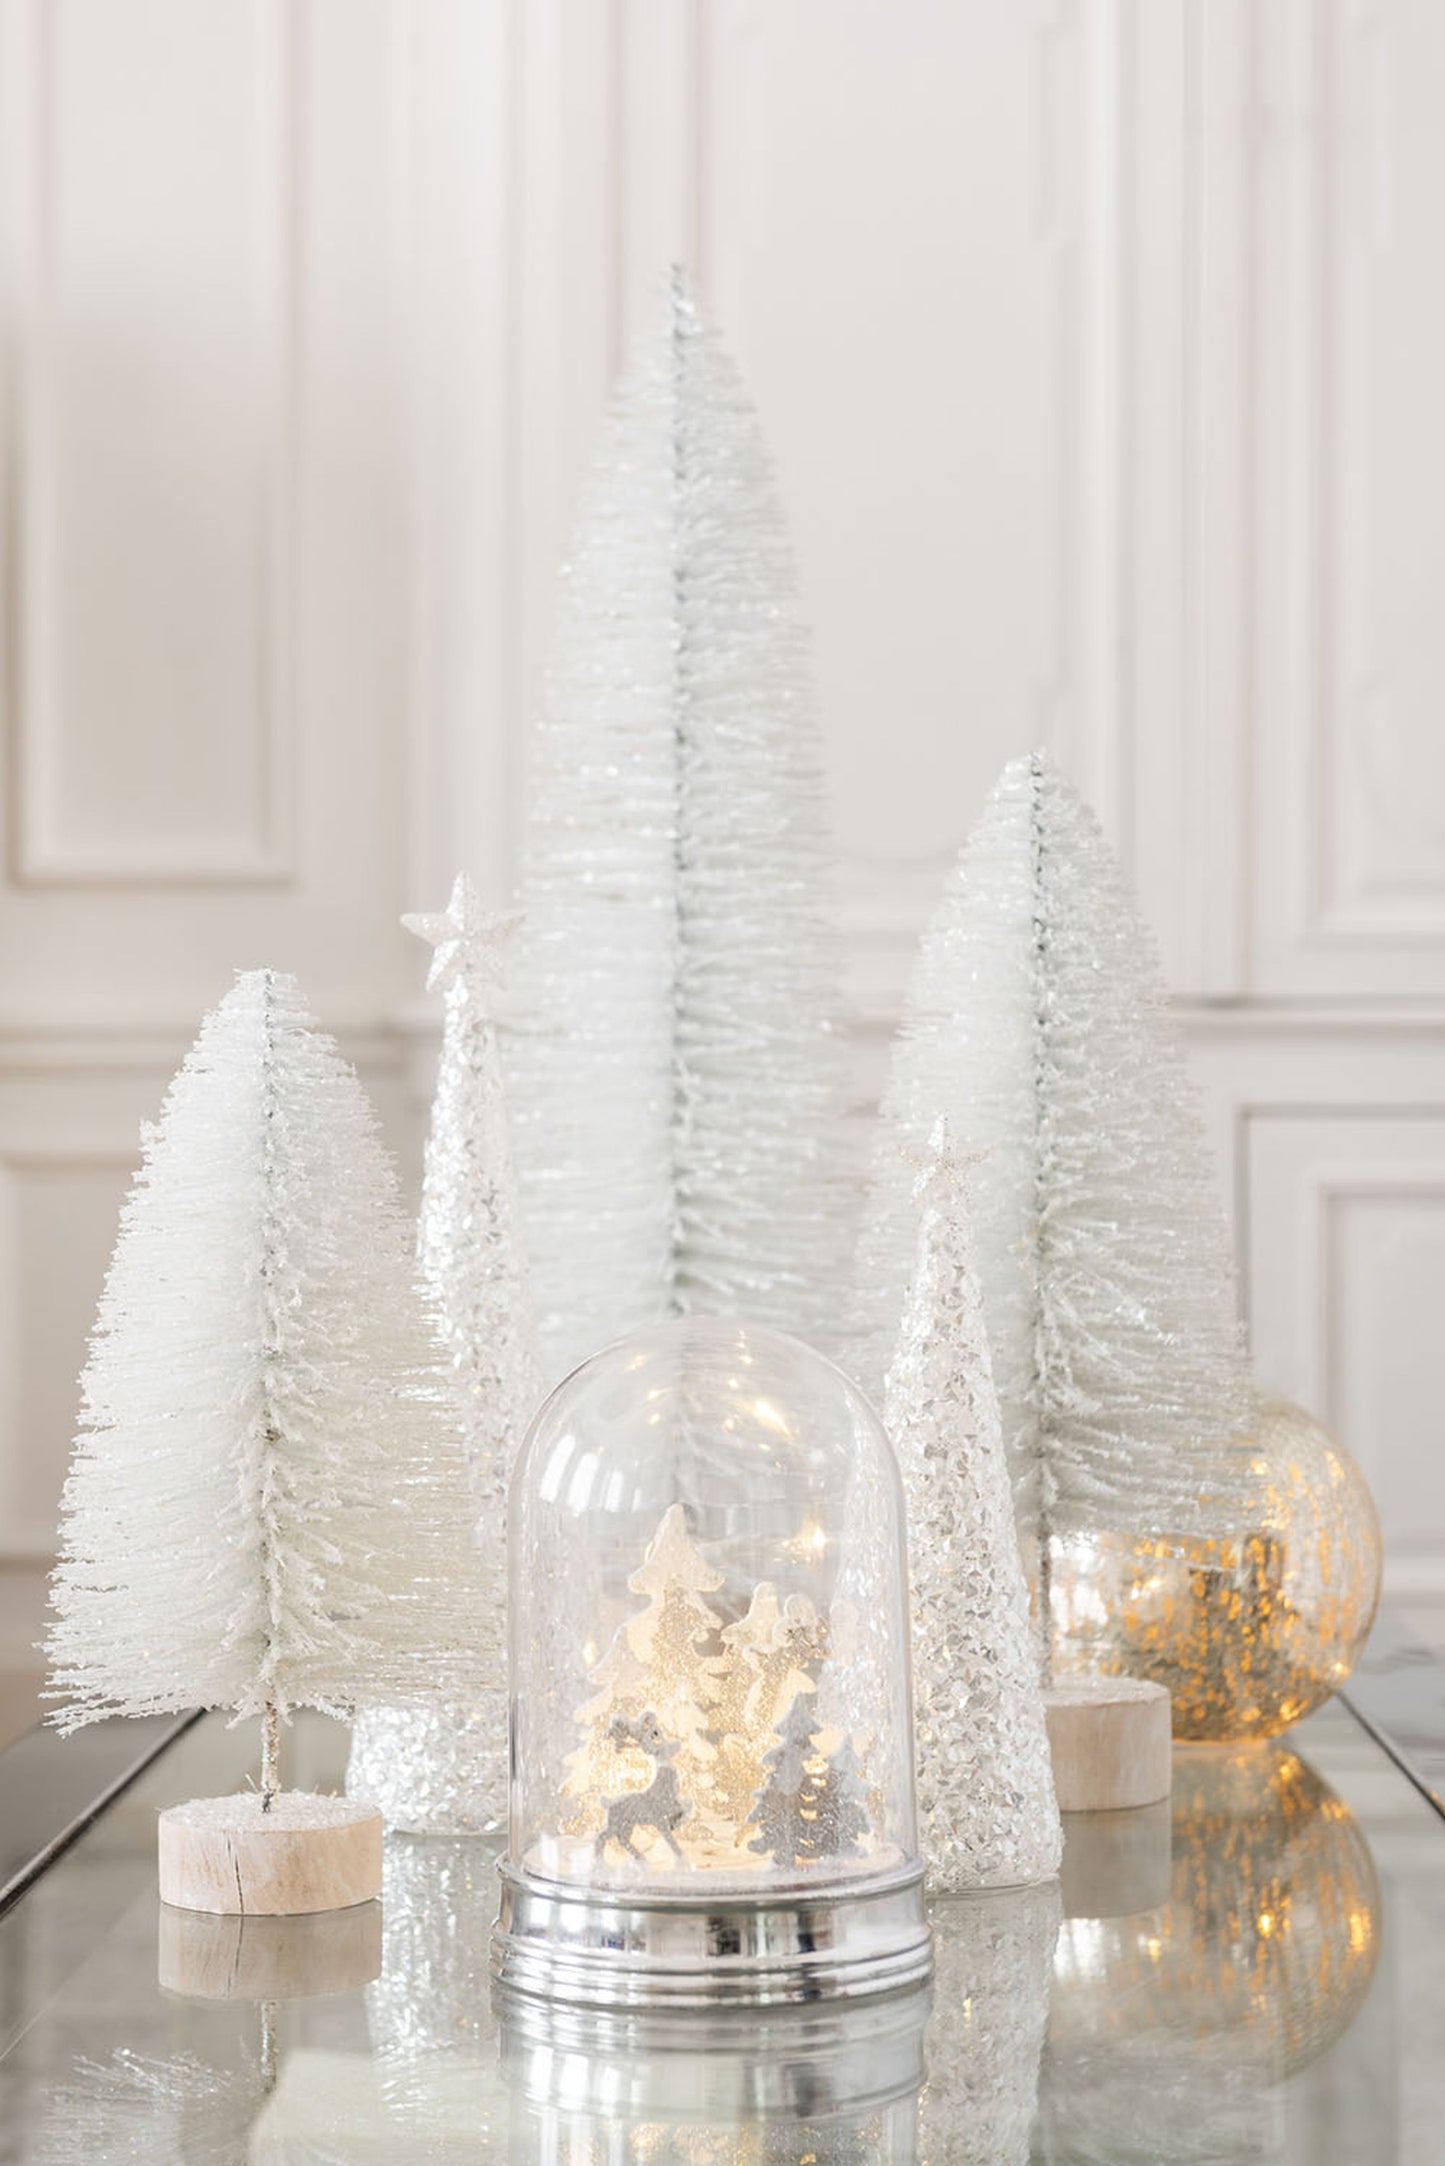 Juledekoration i sølv og hvid med LED lys